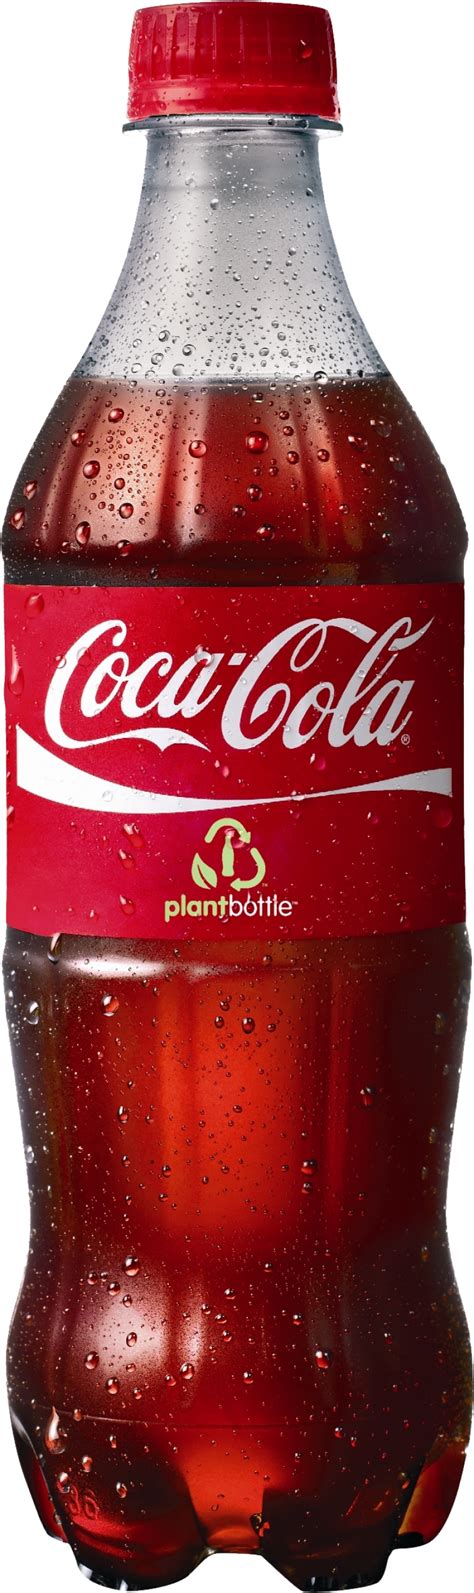 Coca Cola Png Hd Coca Cola Oz Bottle Png Image With Transparent My